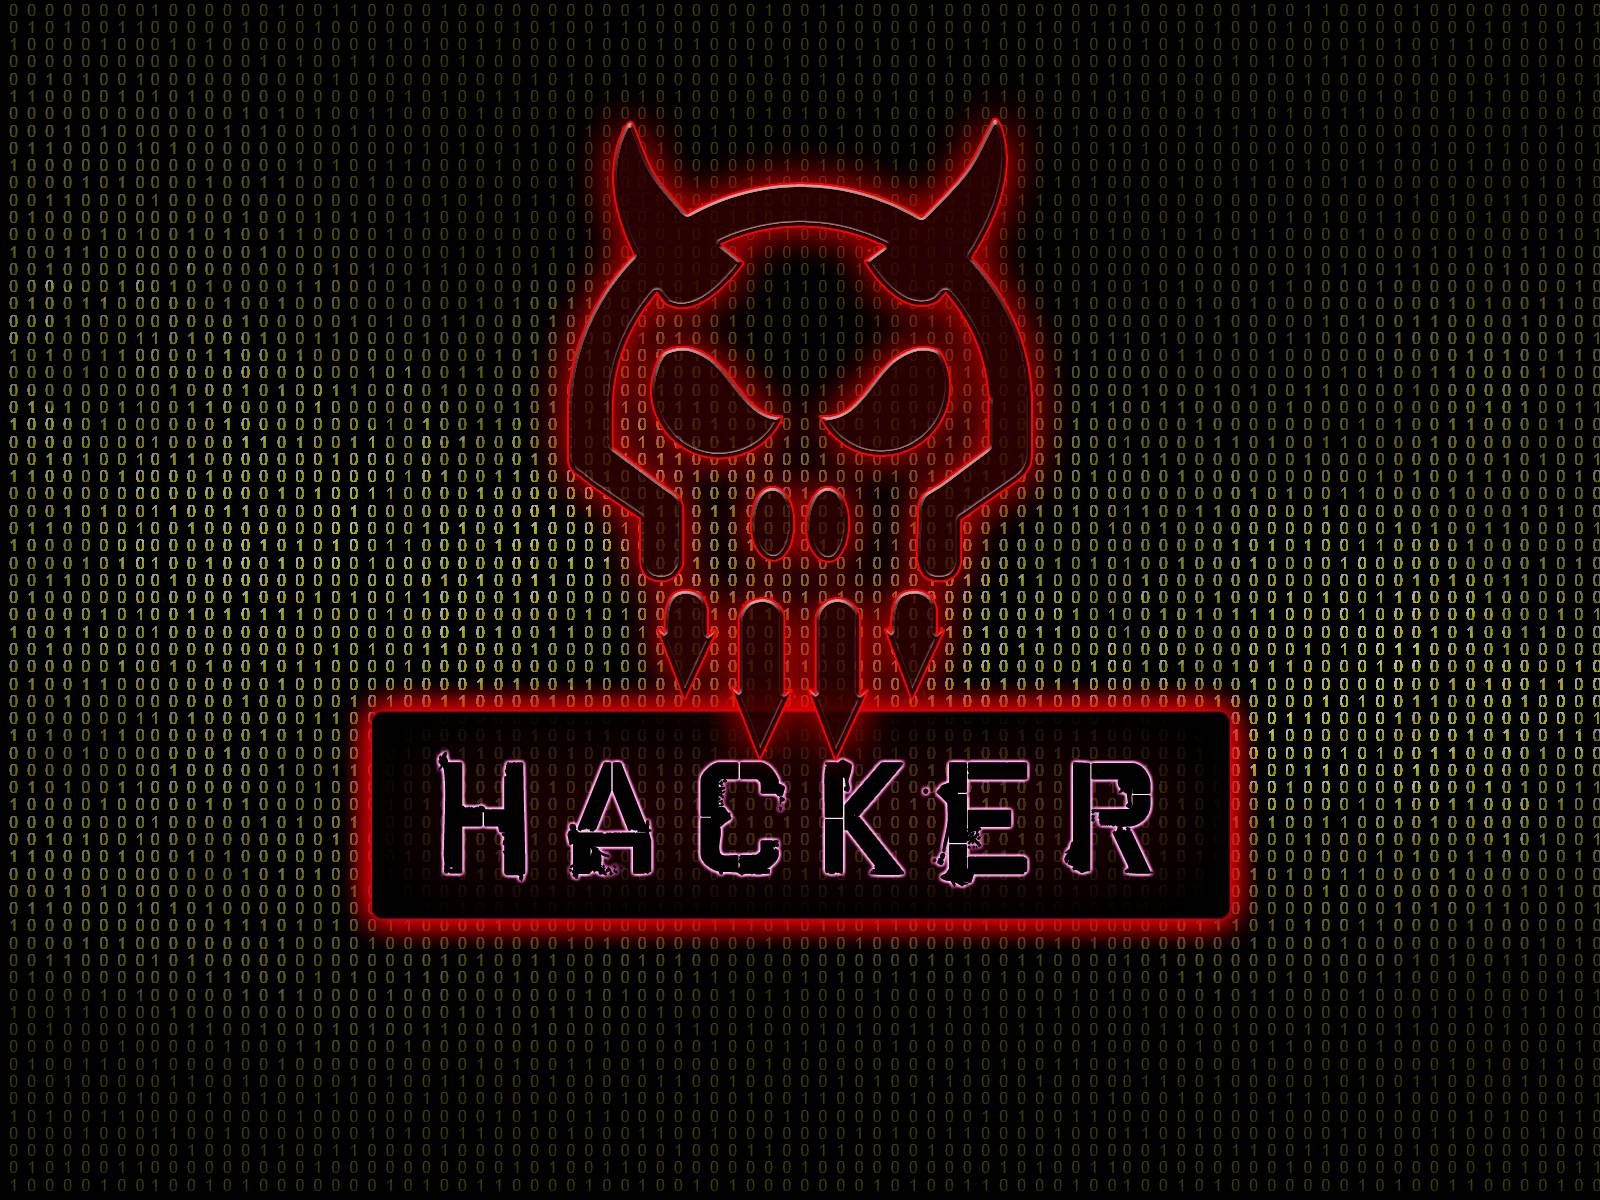 Technology Hacker HD Wallpaper | Background Image